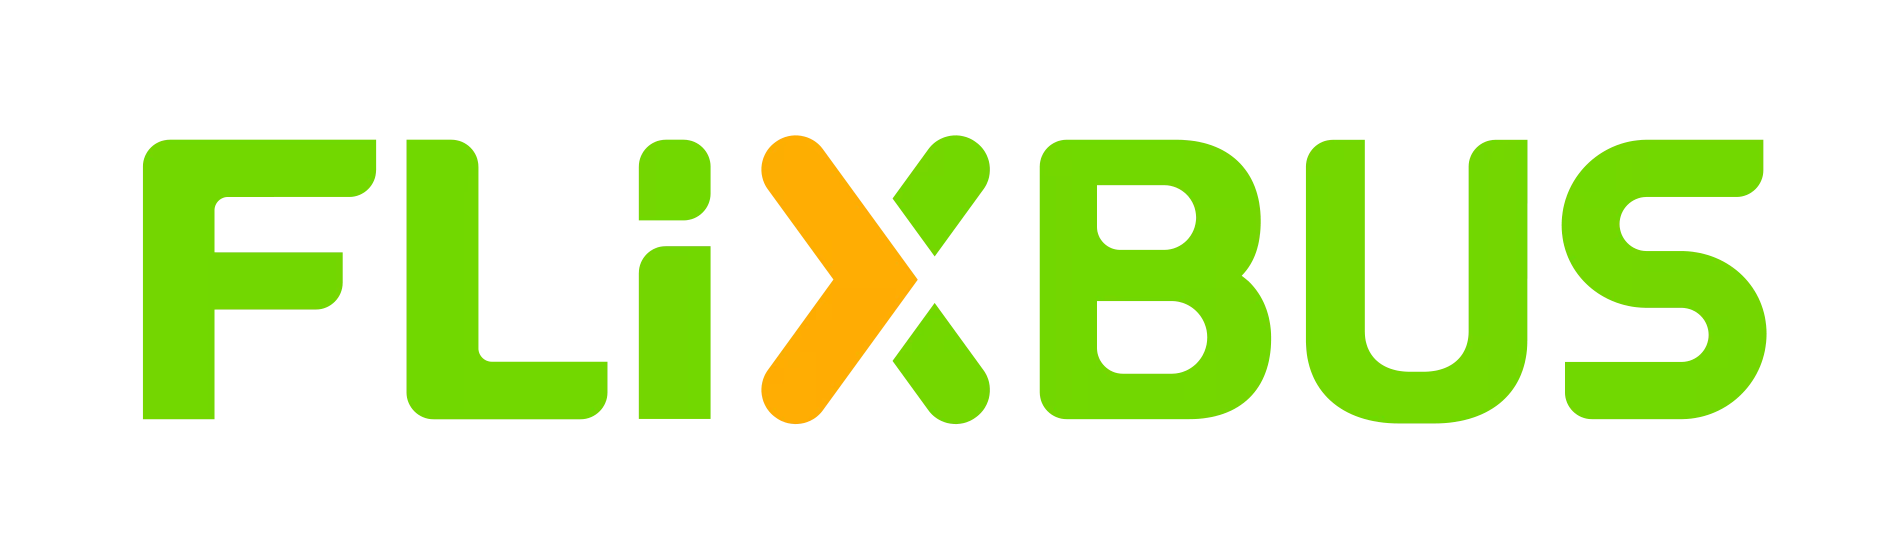 Flixbus - logo